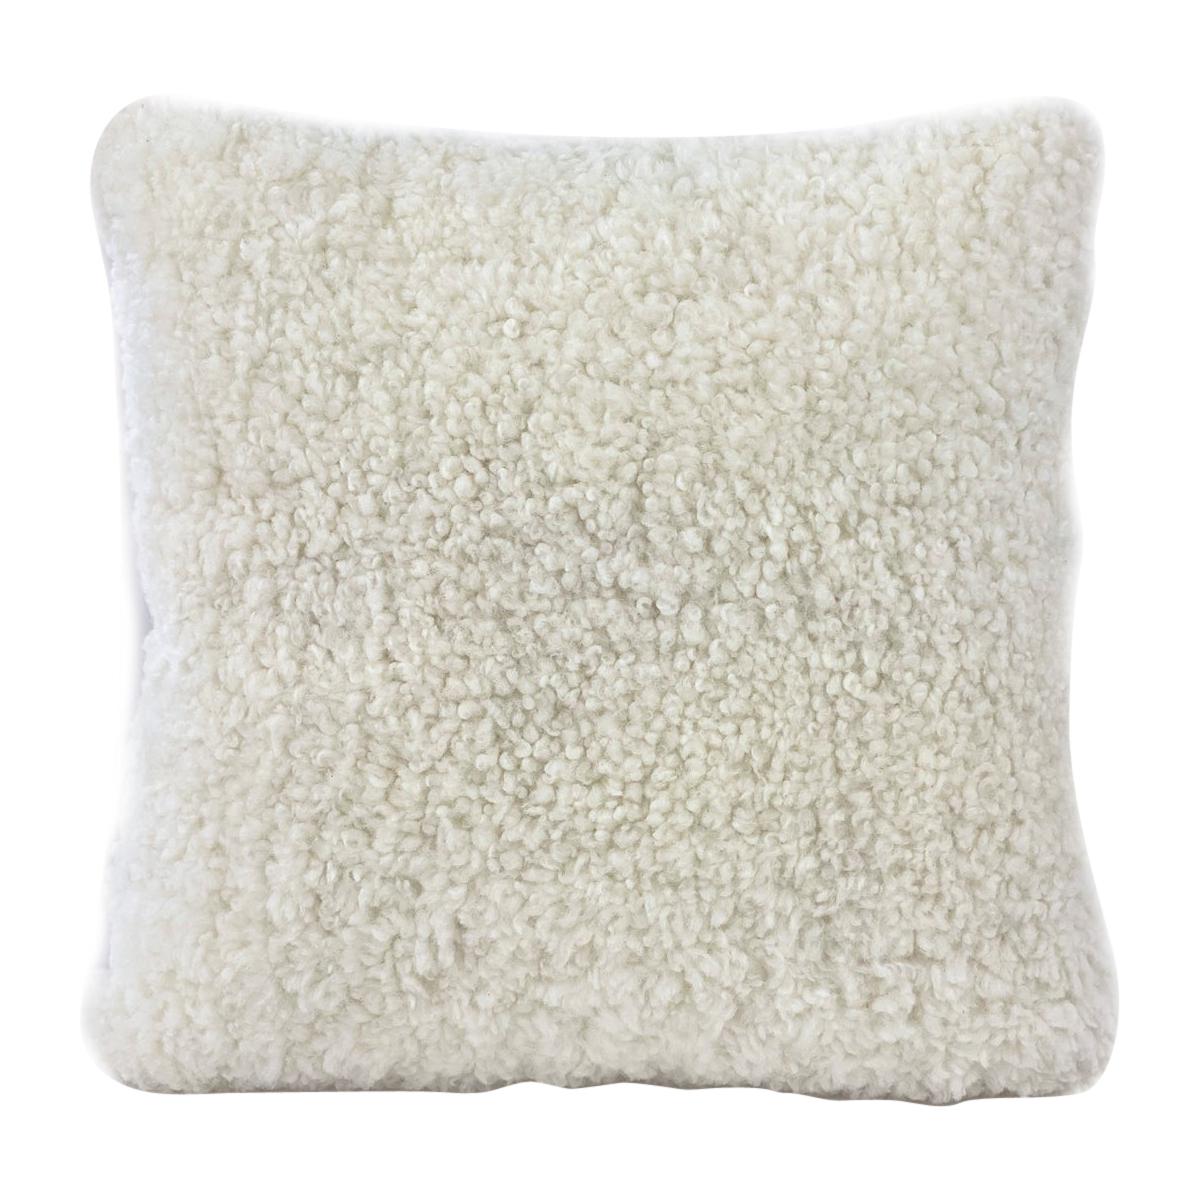 Shearling Pillow, White Sheepskin Square 18x18"  40x40cm 